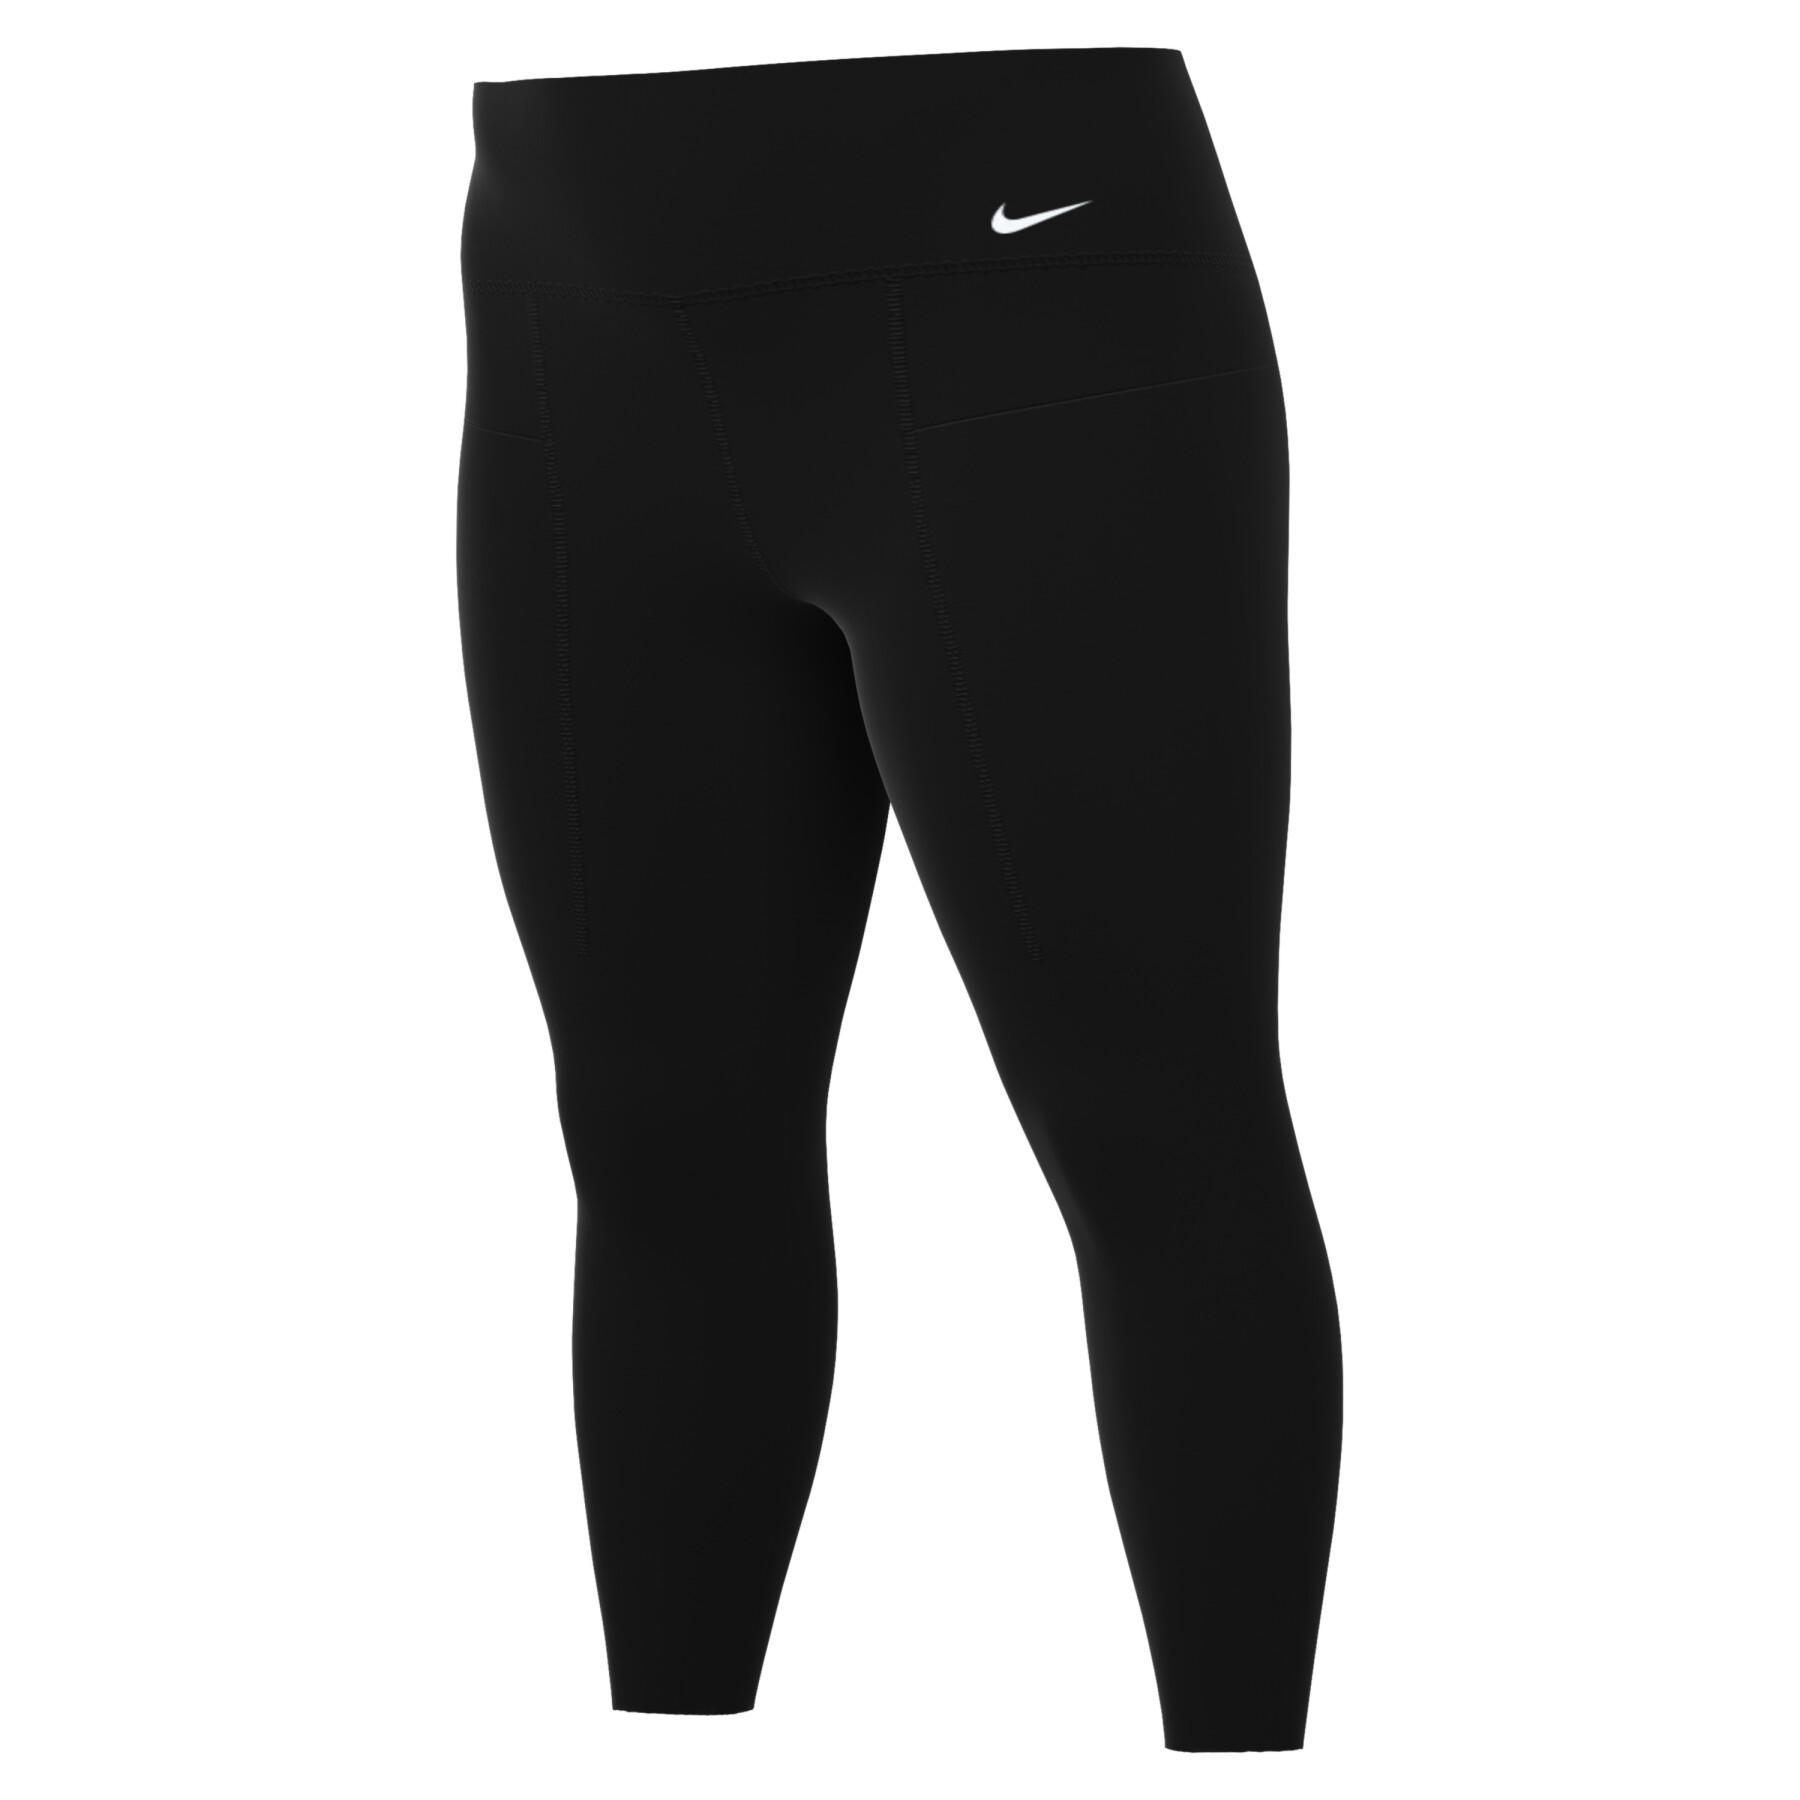 Pernas de mulher Nike Dri-FIT Universal